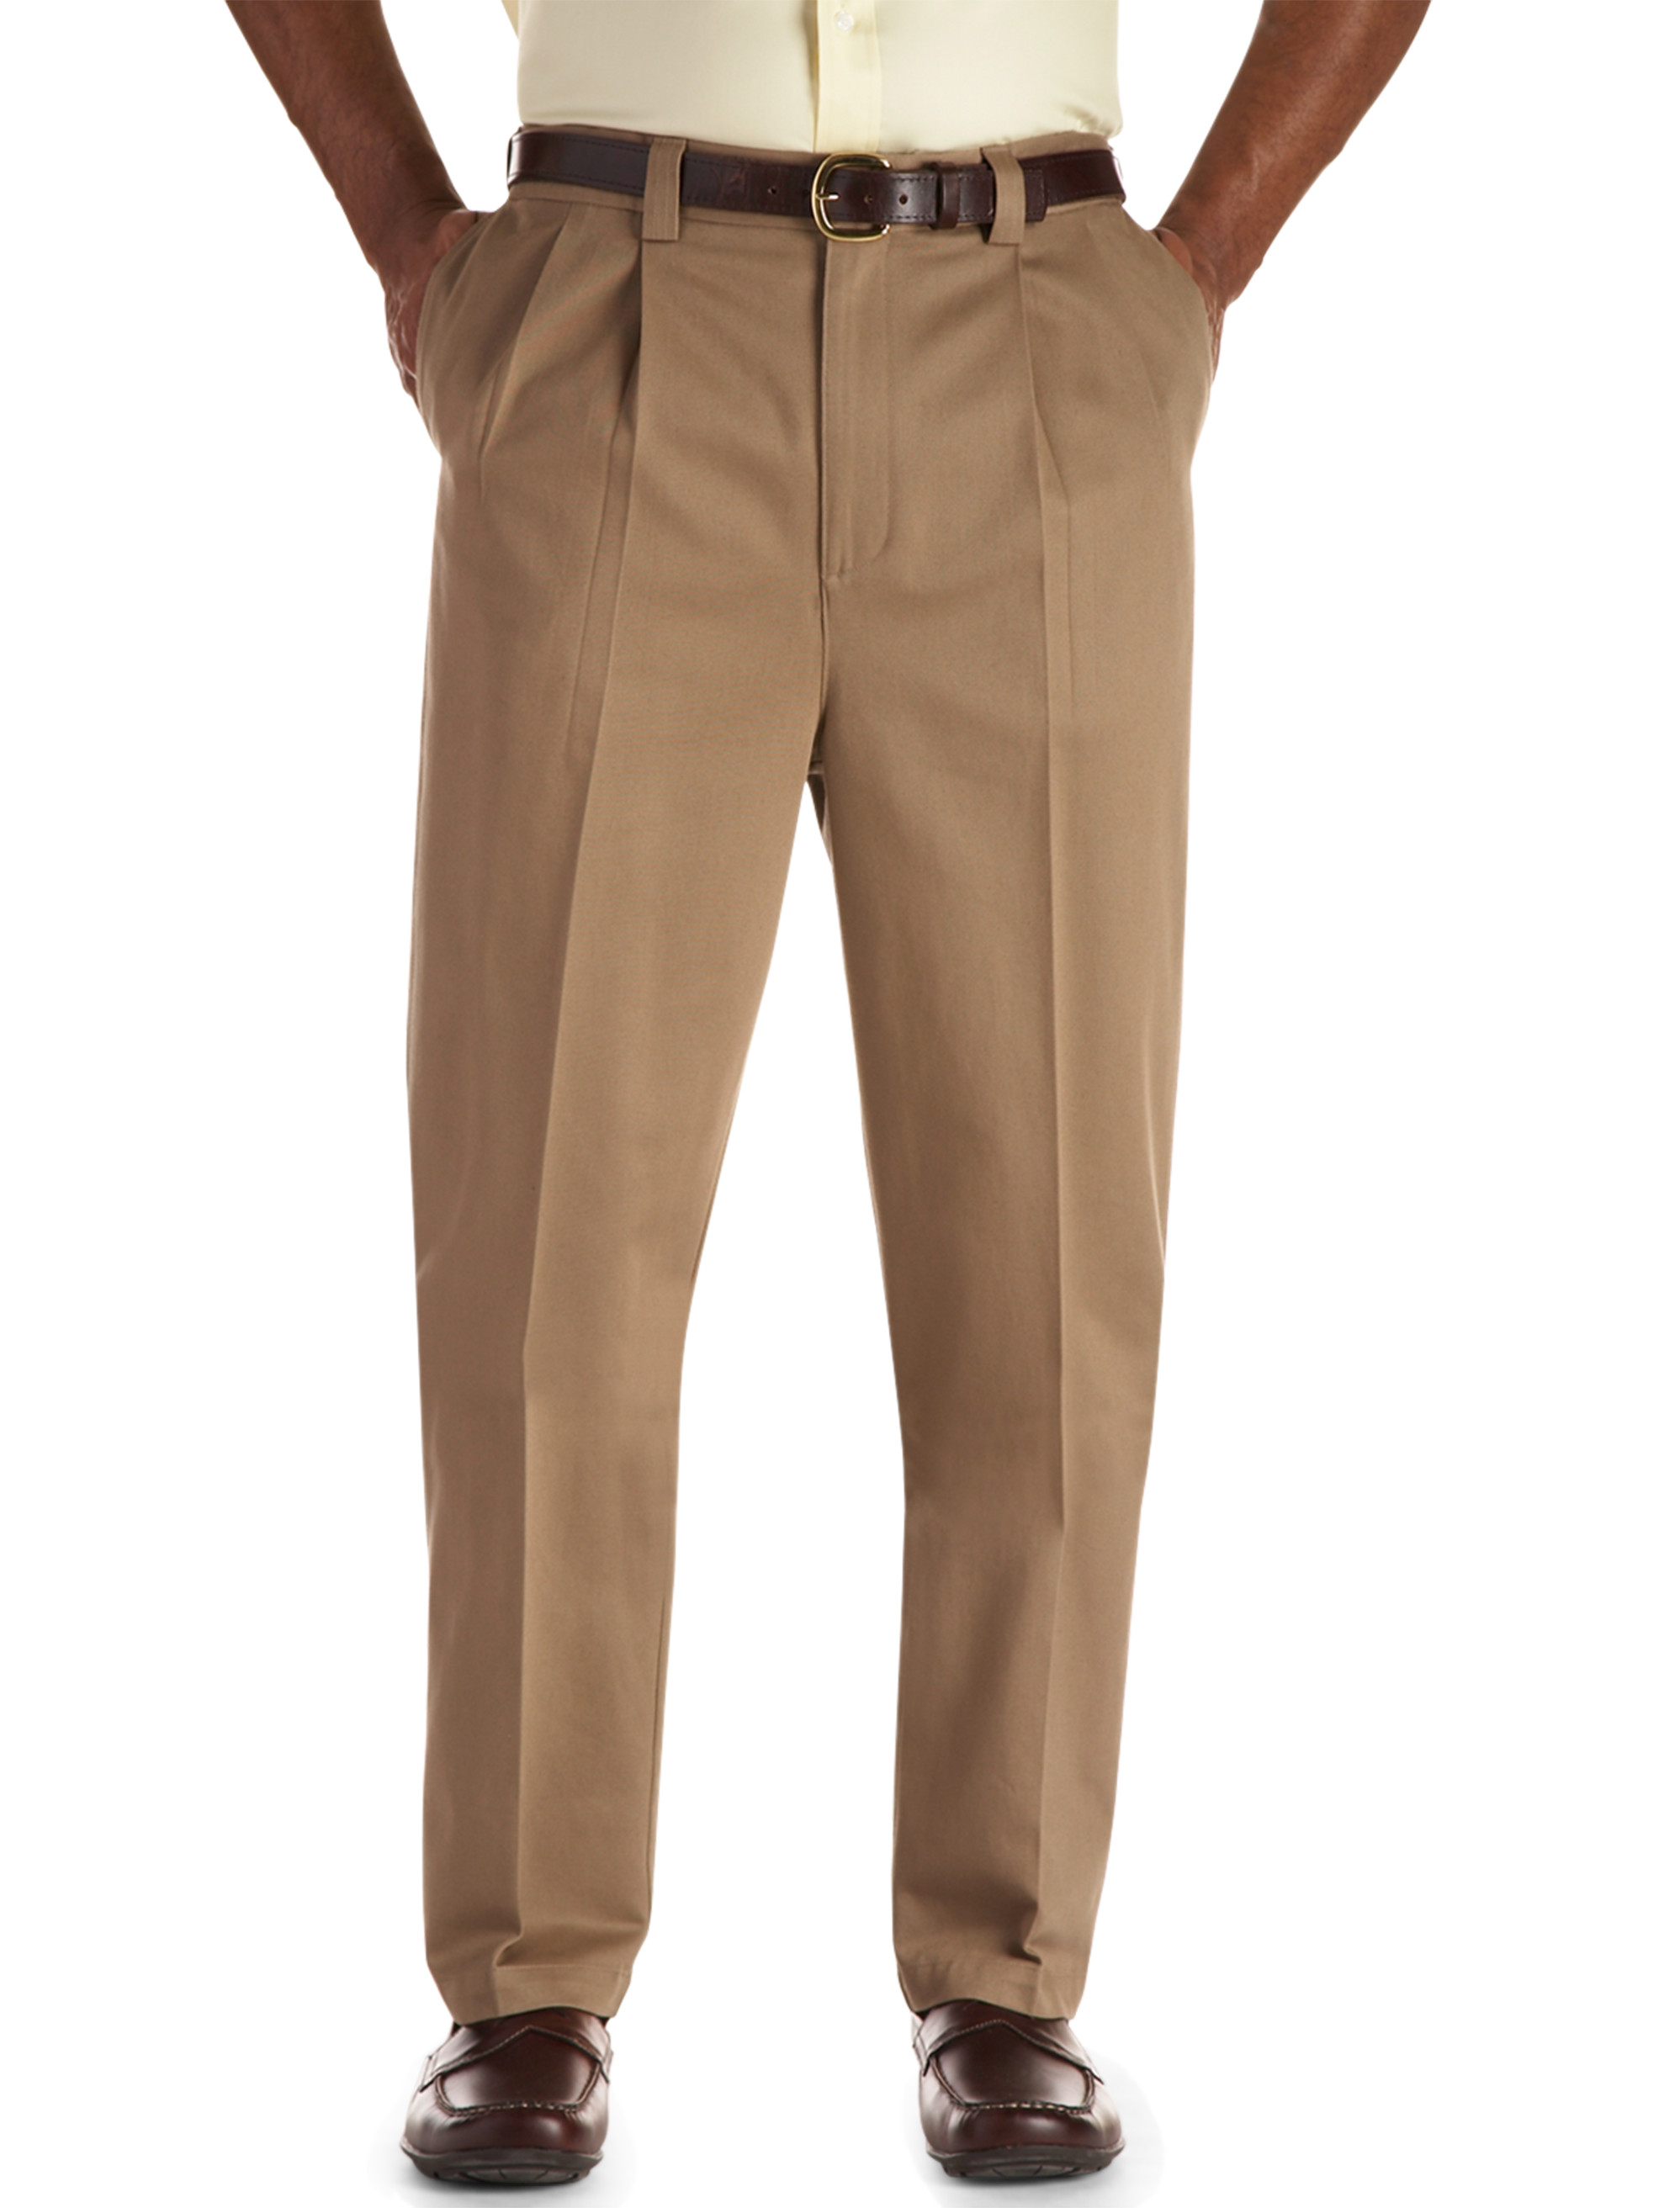 Oak Hill Waist-Relaxer Pleated Premium Pants Casual Male XL